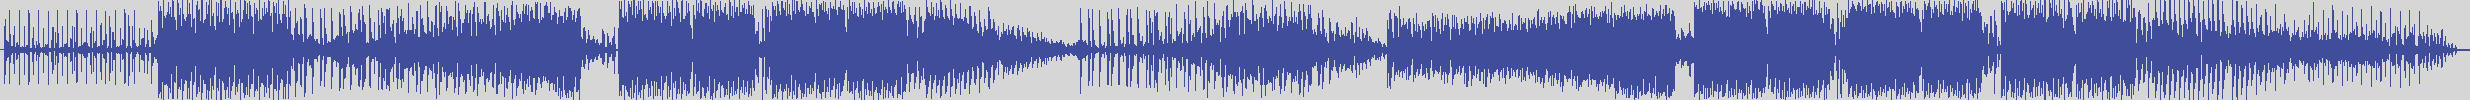 suxess [SX004] Nari - Bucci Bag [Fabio Even Remix] audio wave form